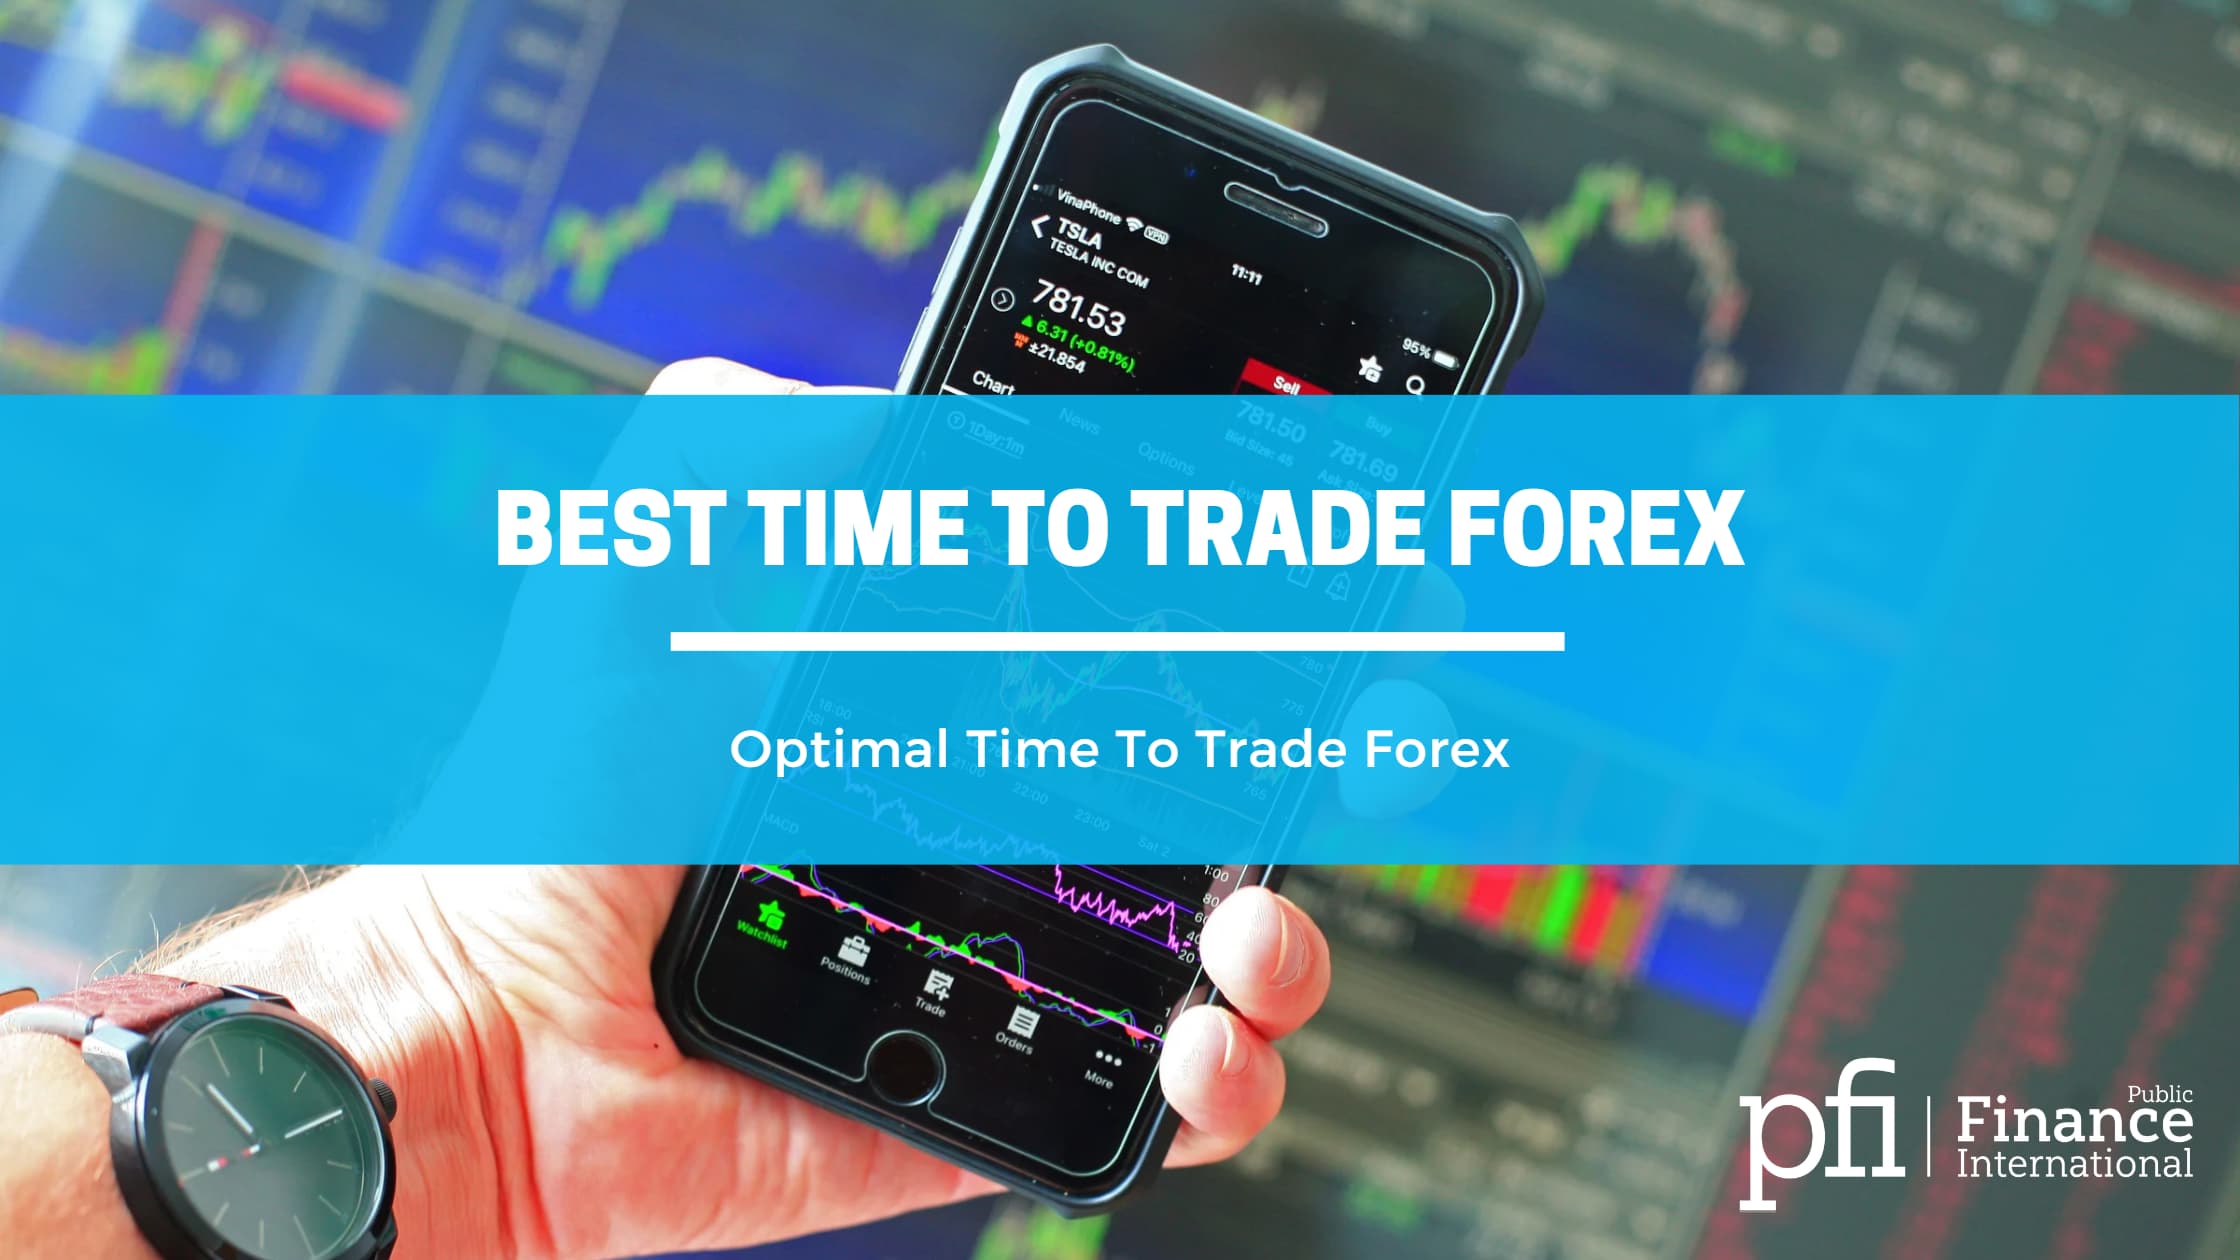 Optimal Times To Trade Forex